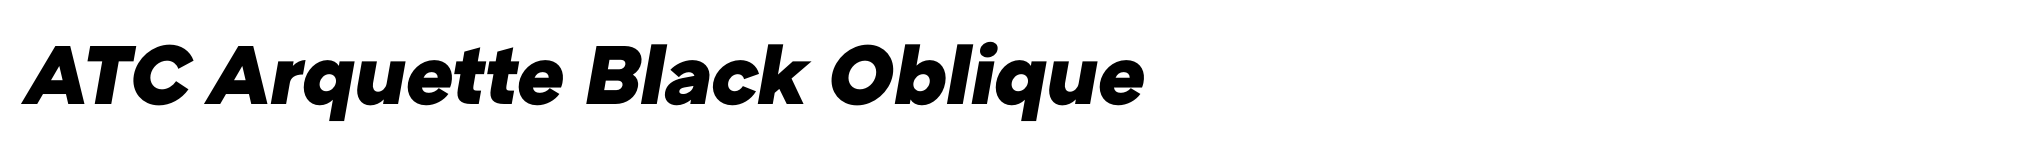 ATC Arquette Black Oblique image